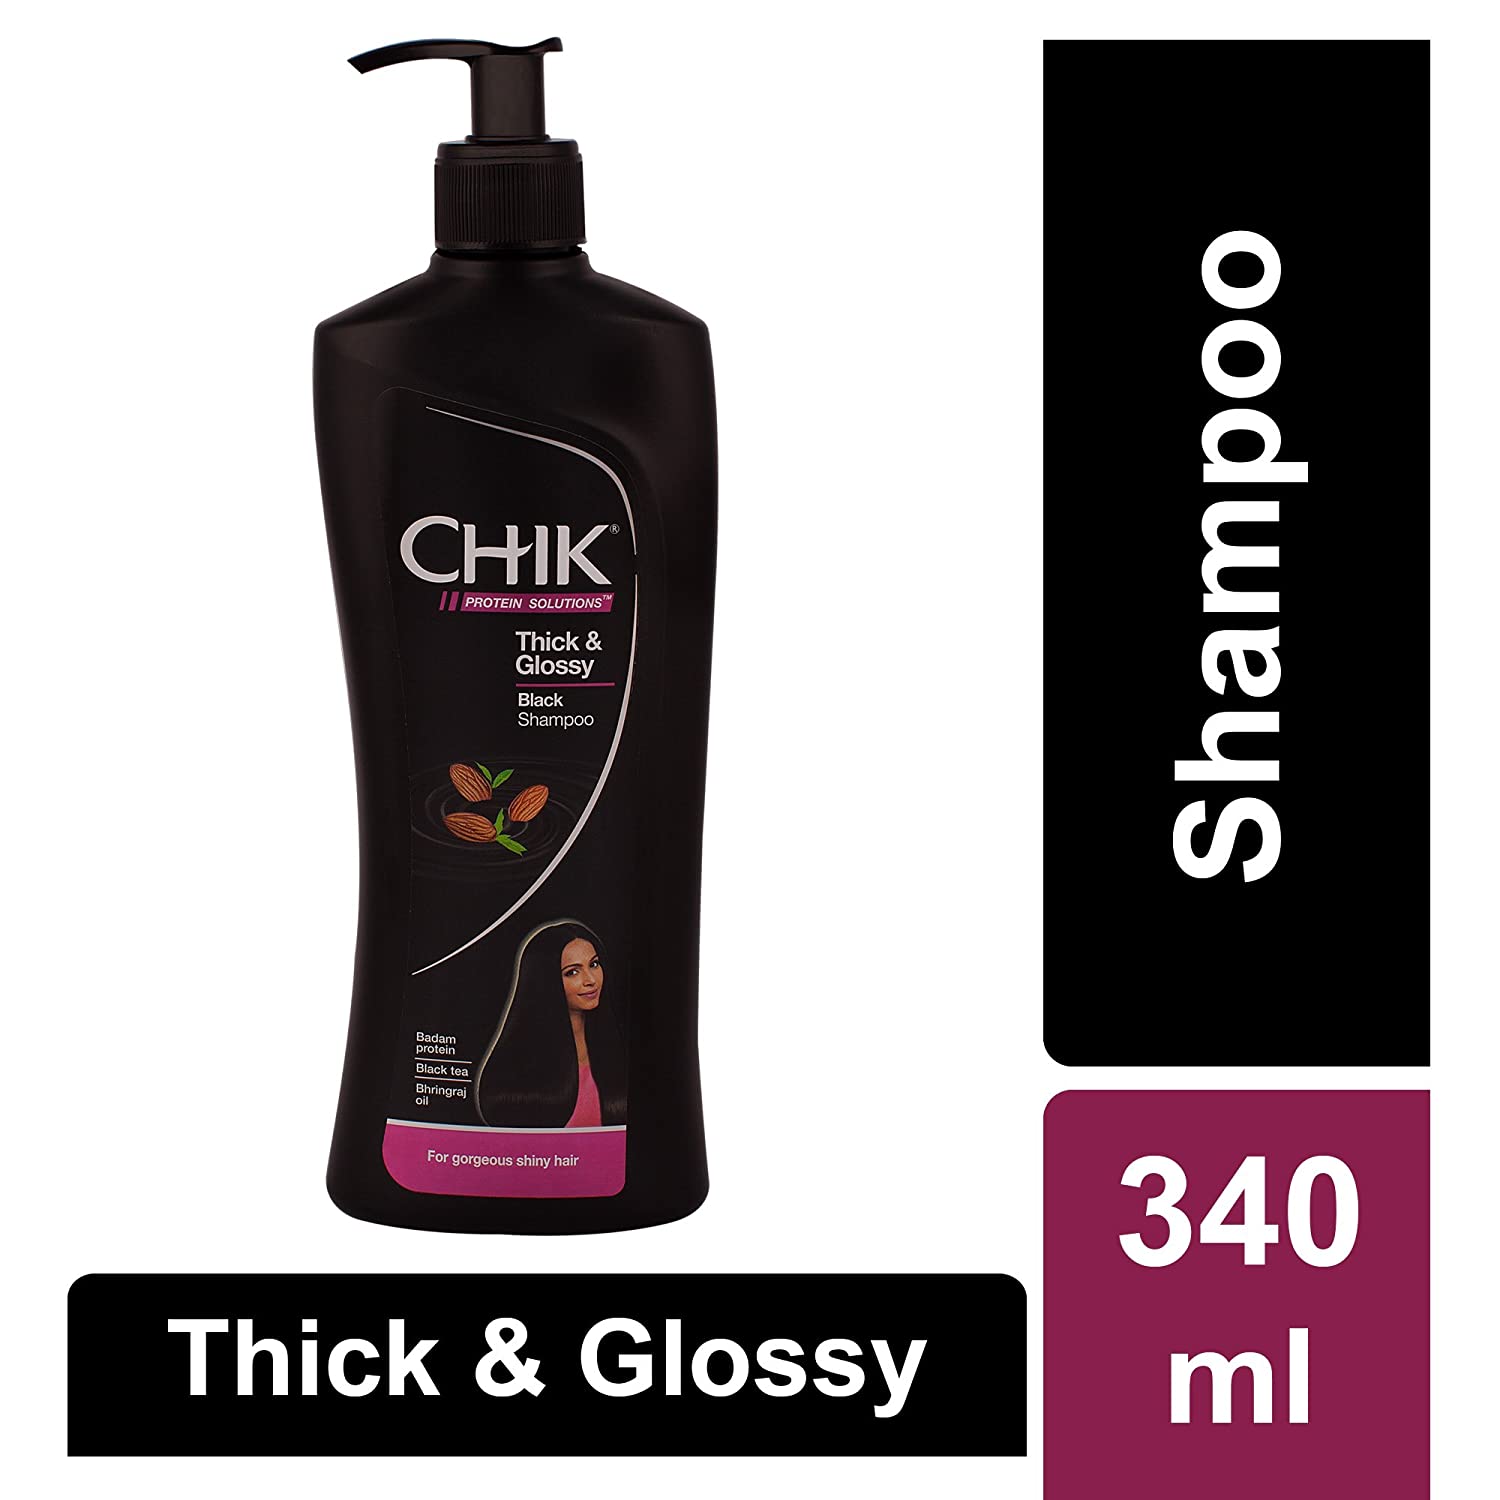 Chik Thick & Glossy Black Shampoo, 340ml